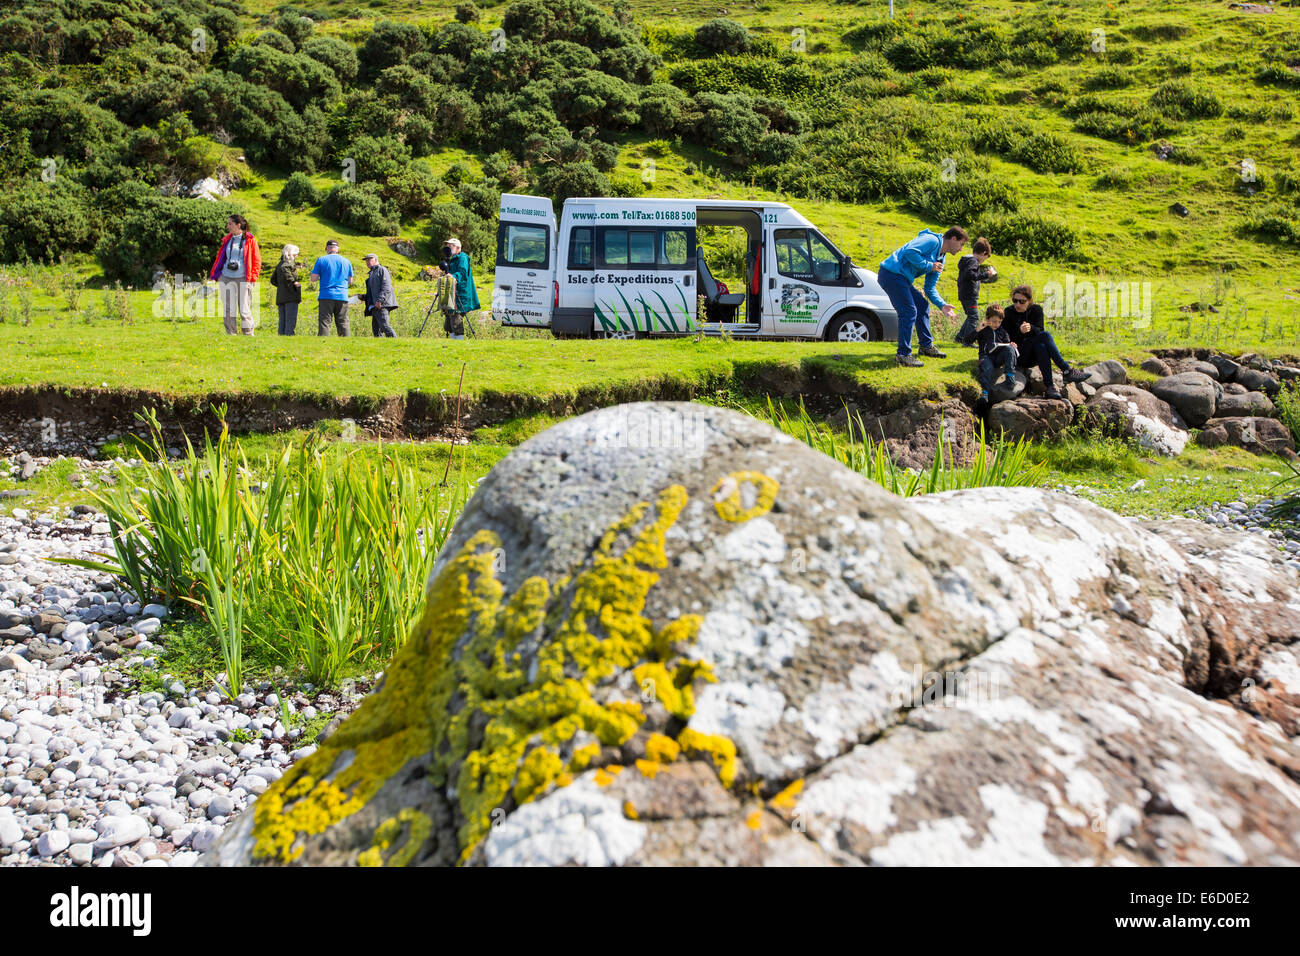 Una isla de Mull Wildlife tour van mostrando las islas fauna para turistas, Isle Of Mull, Escocia, Reino Unido. Foto de stock